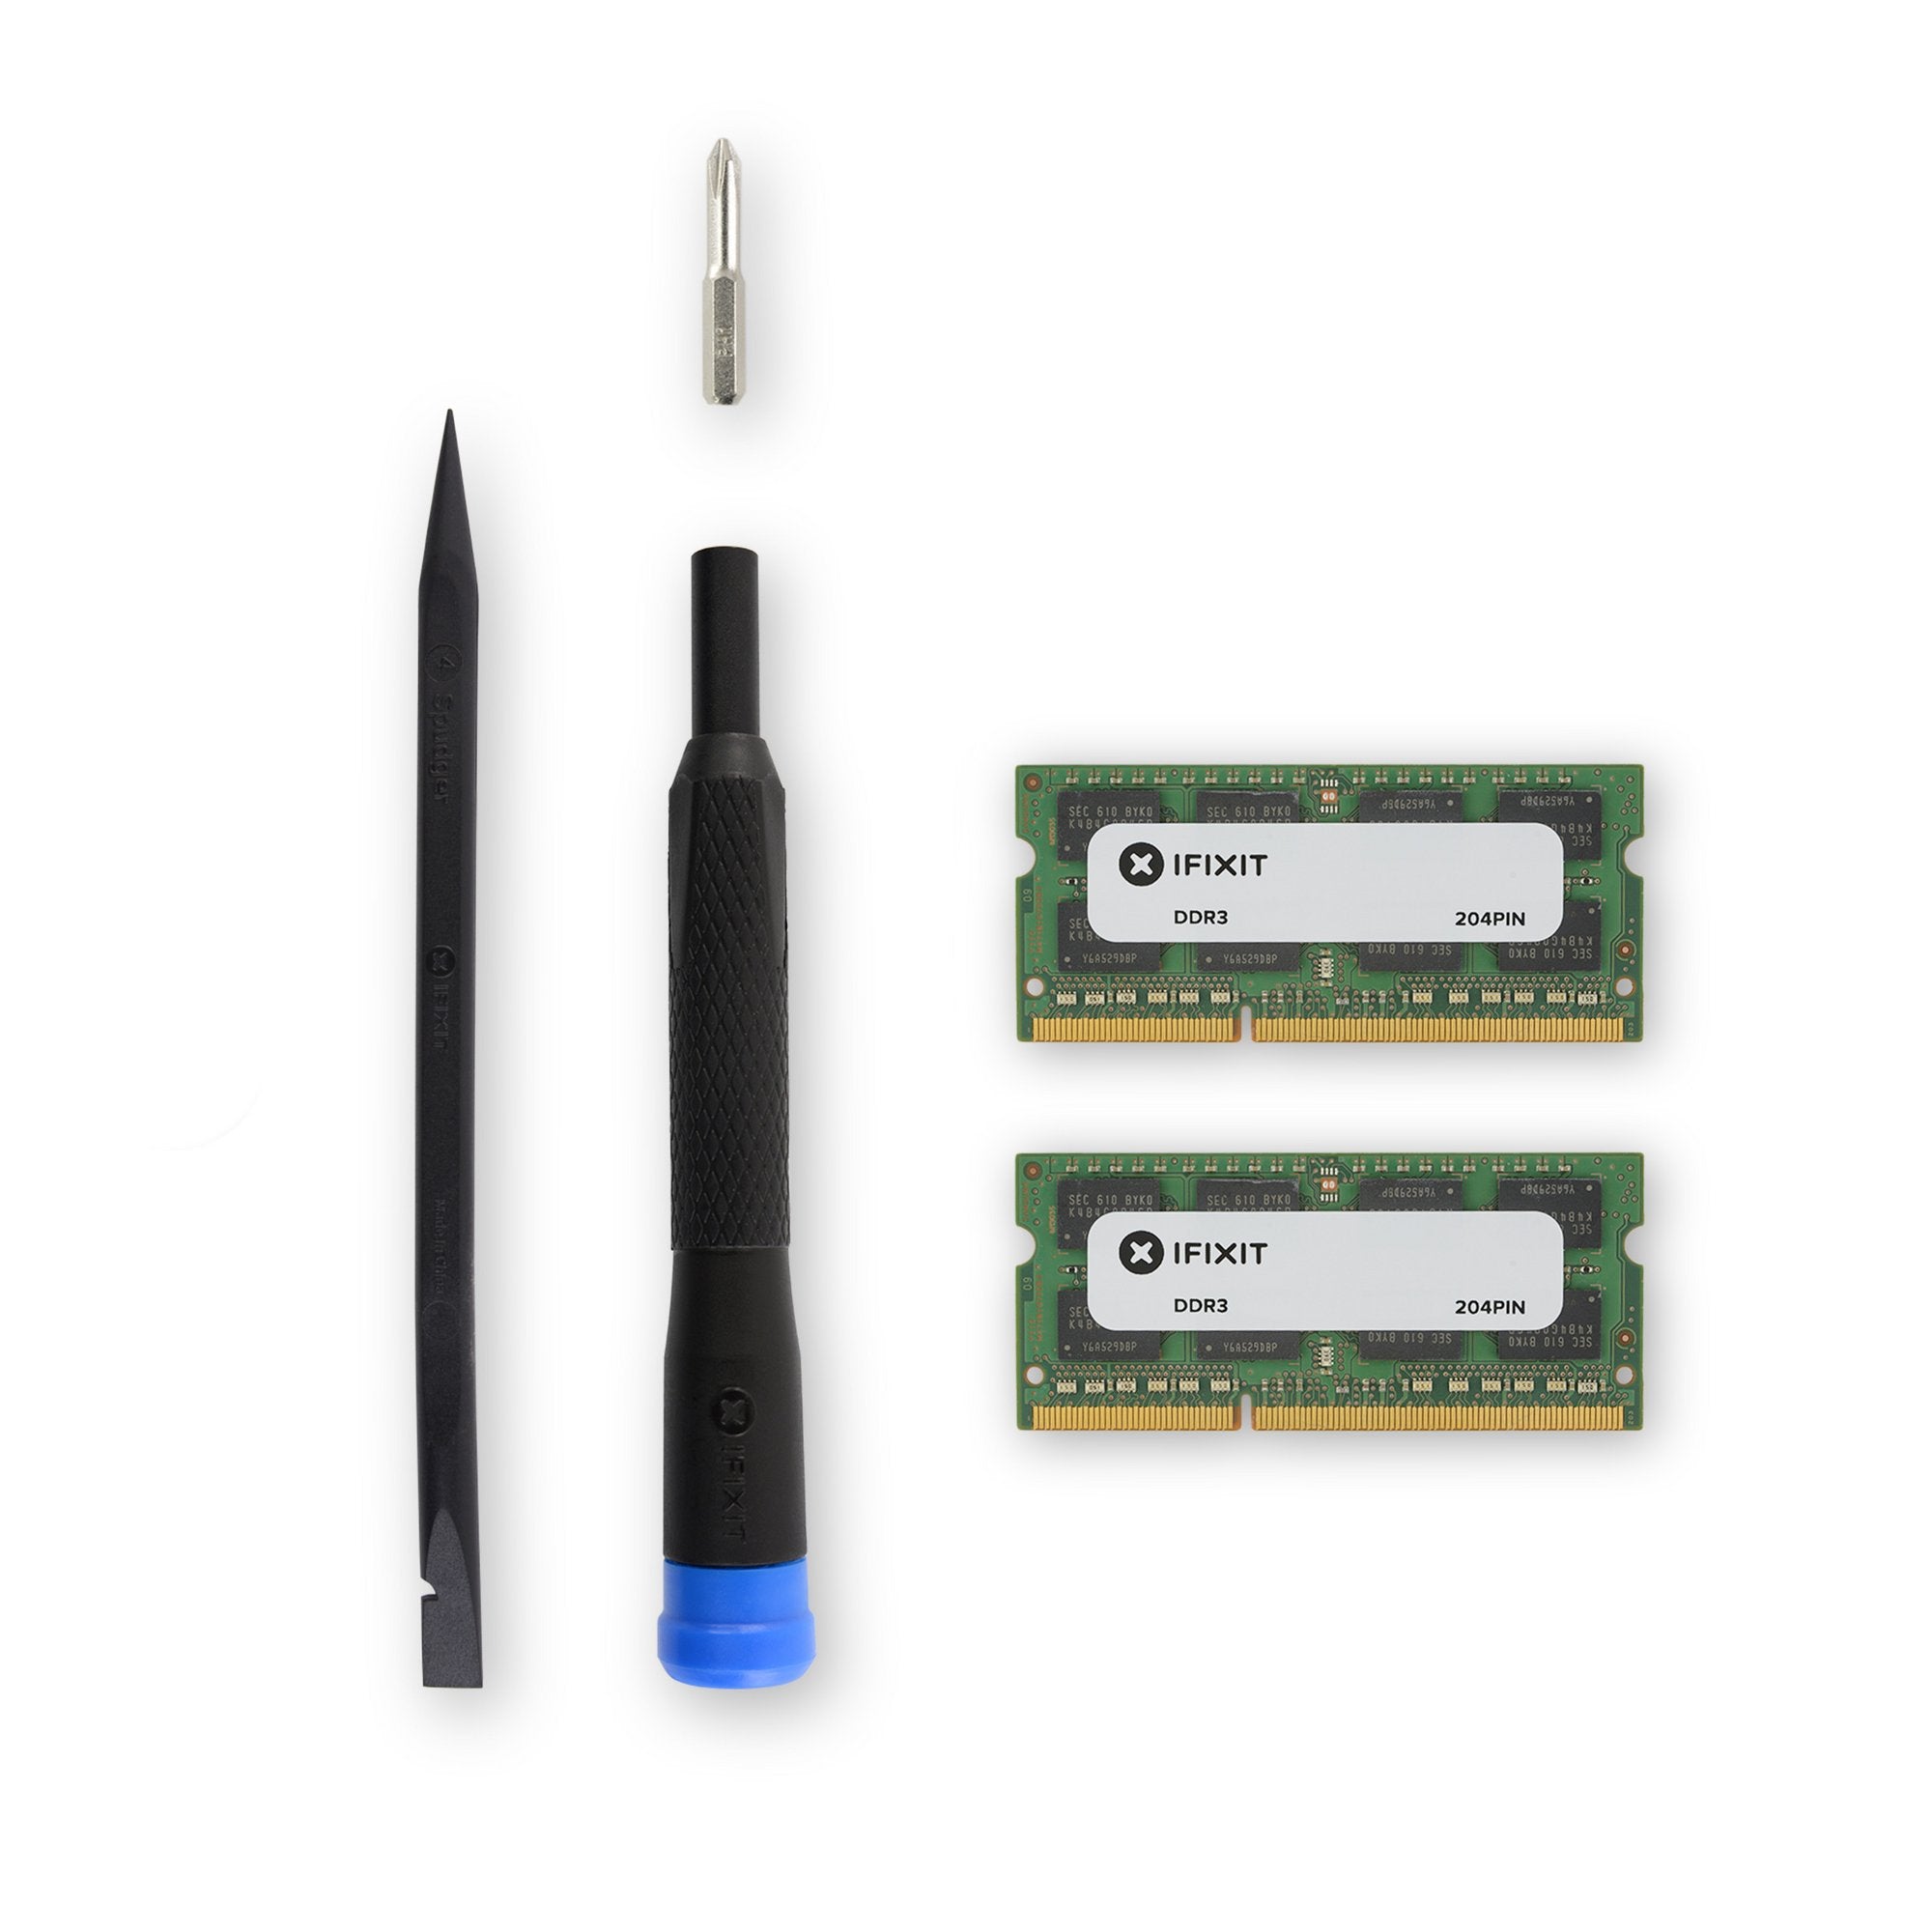 iMac Intel 24" EMC 2267 (Early 2009) Memory Maxxer RAM Upgrade Kit